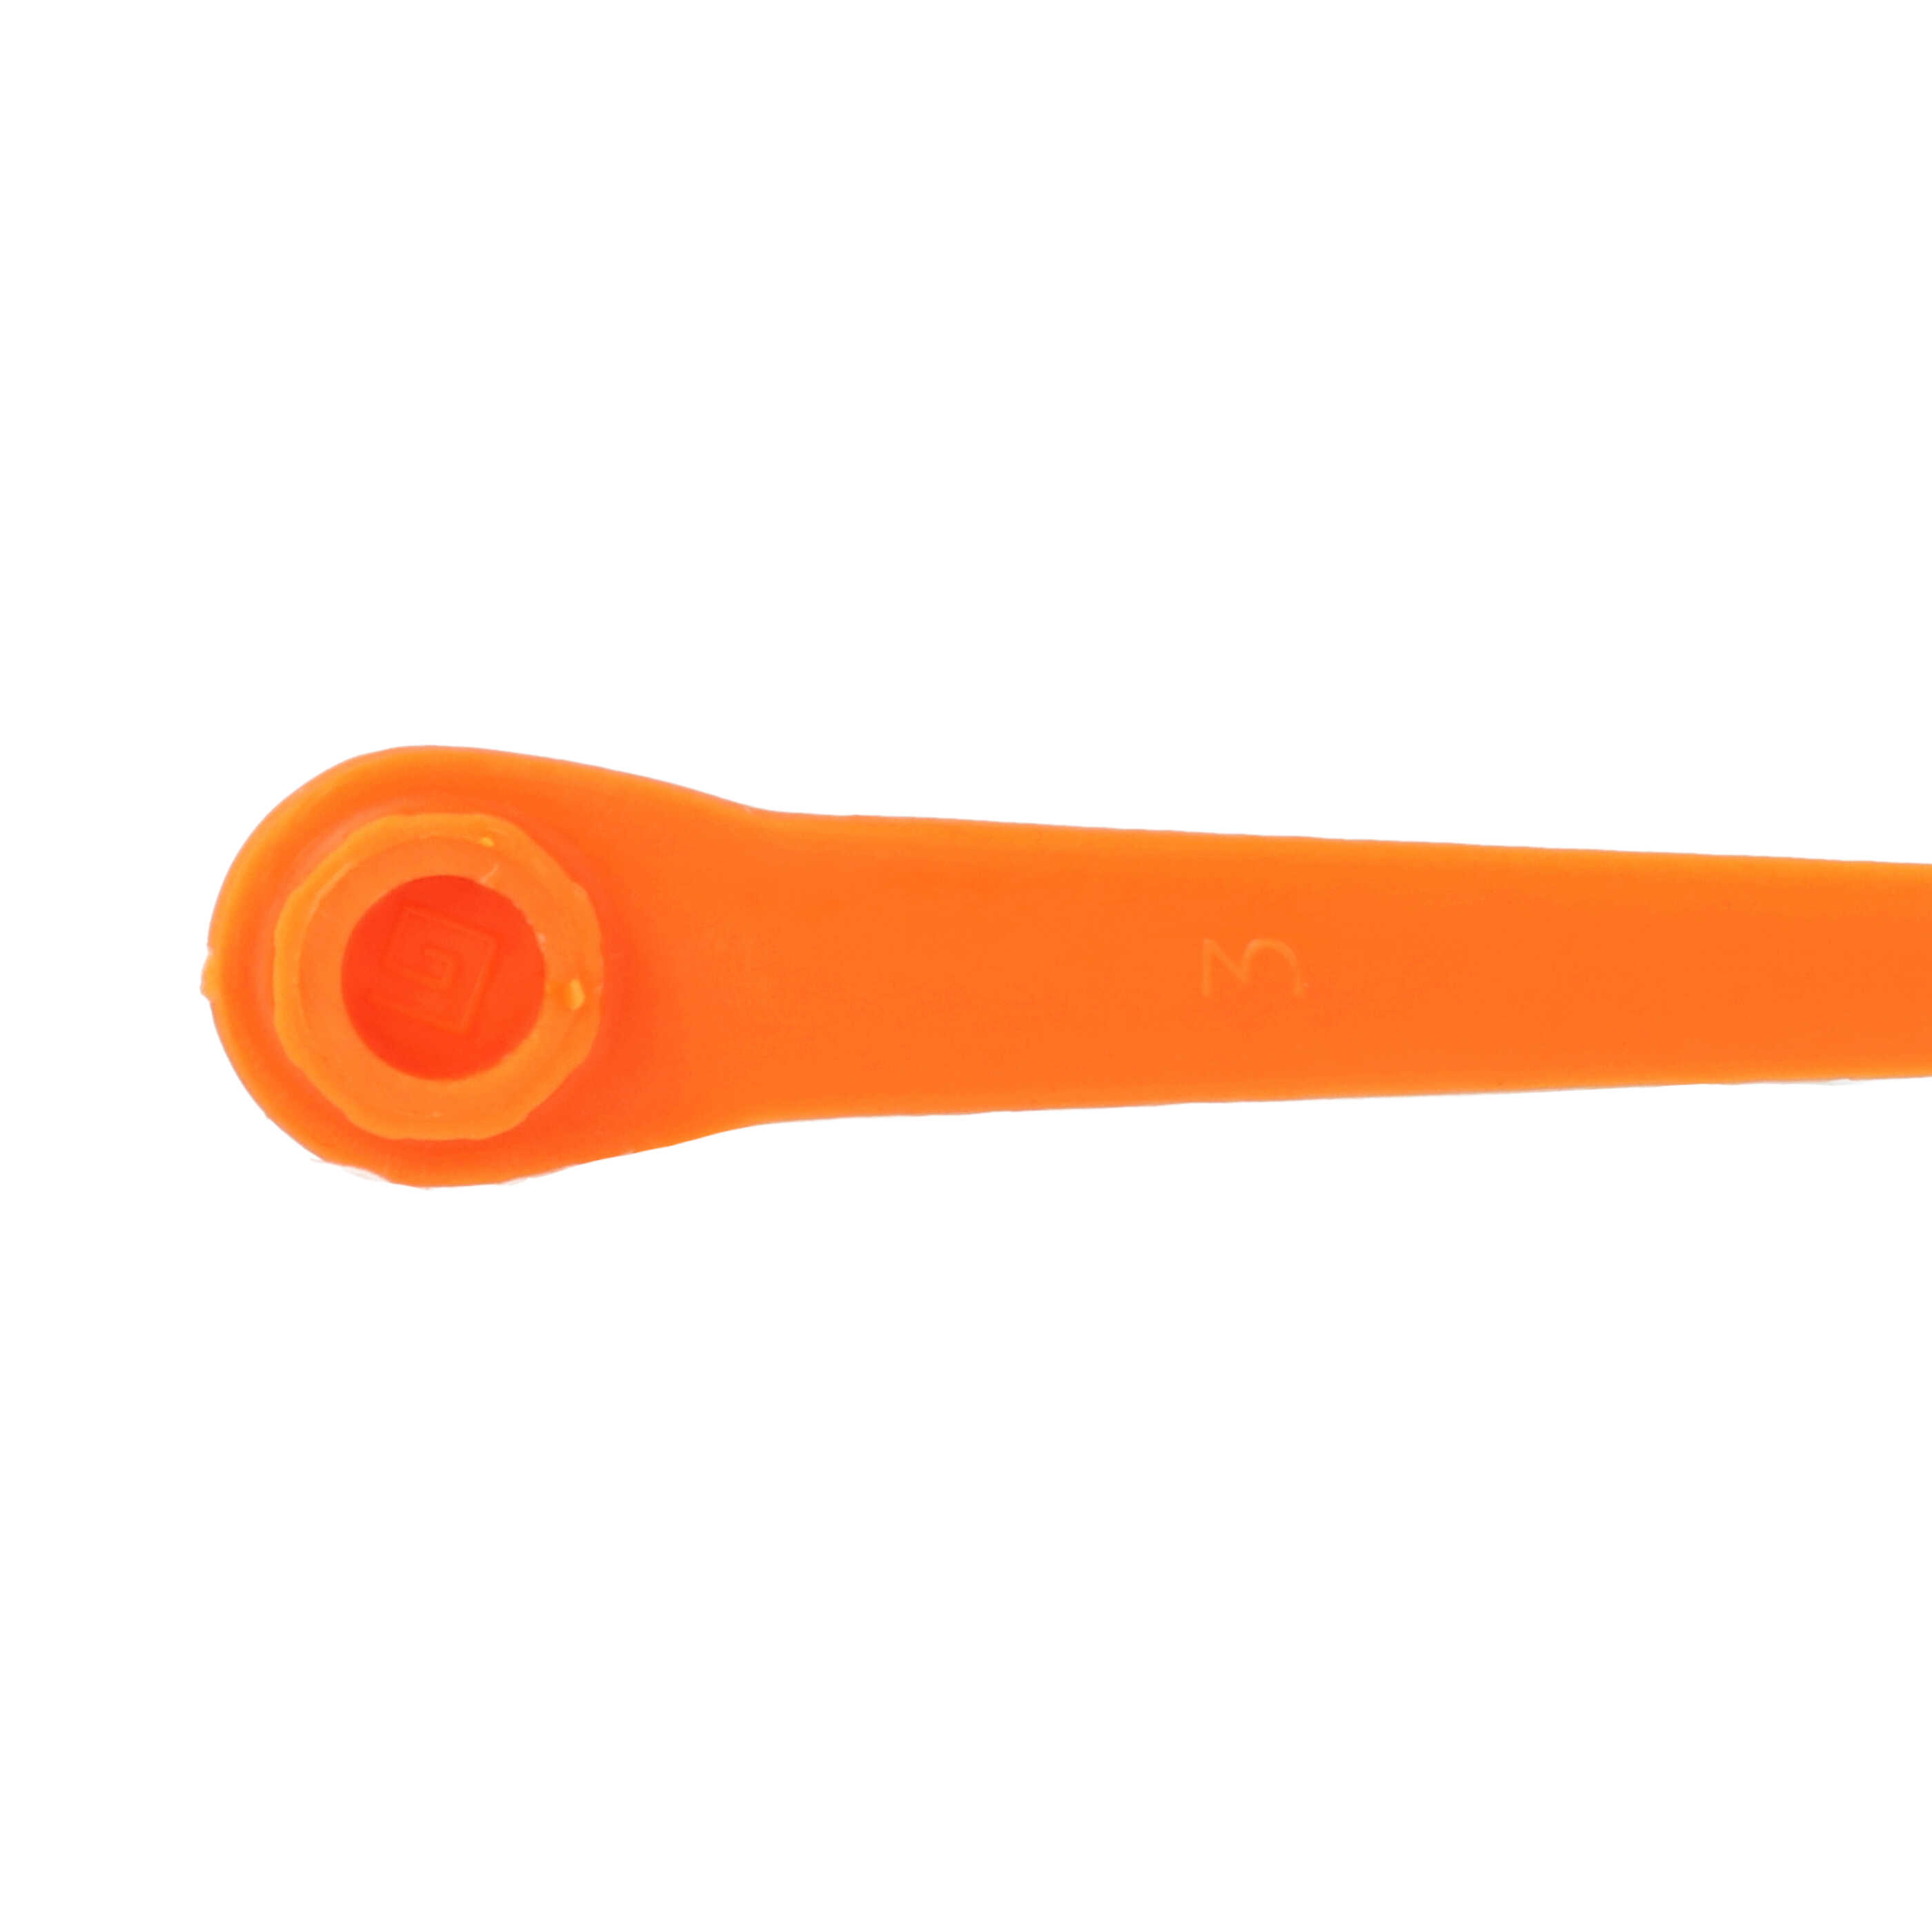 5x Lama sostituisce Gardena RotorCut 5368-20 per tagliaerba - arancione, plastica